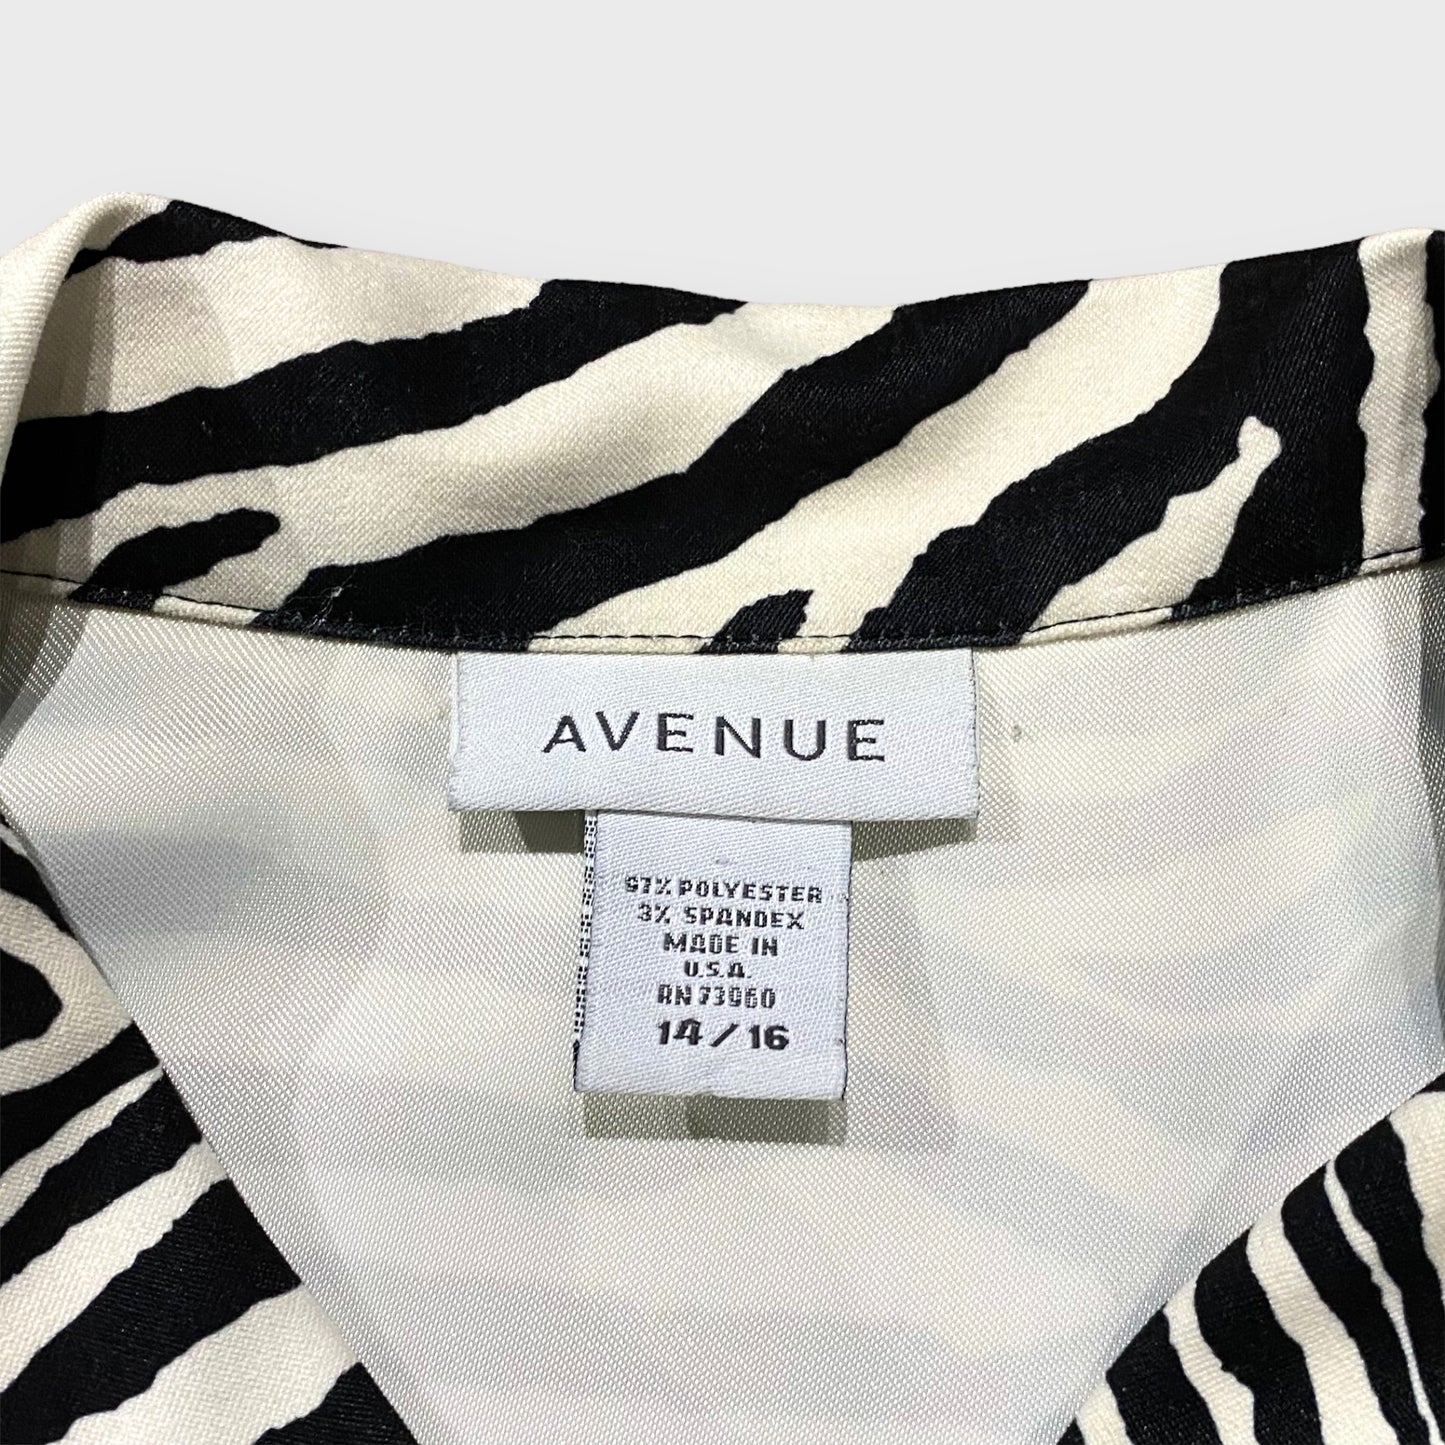 Zebra pattern jacket